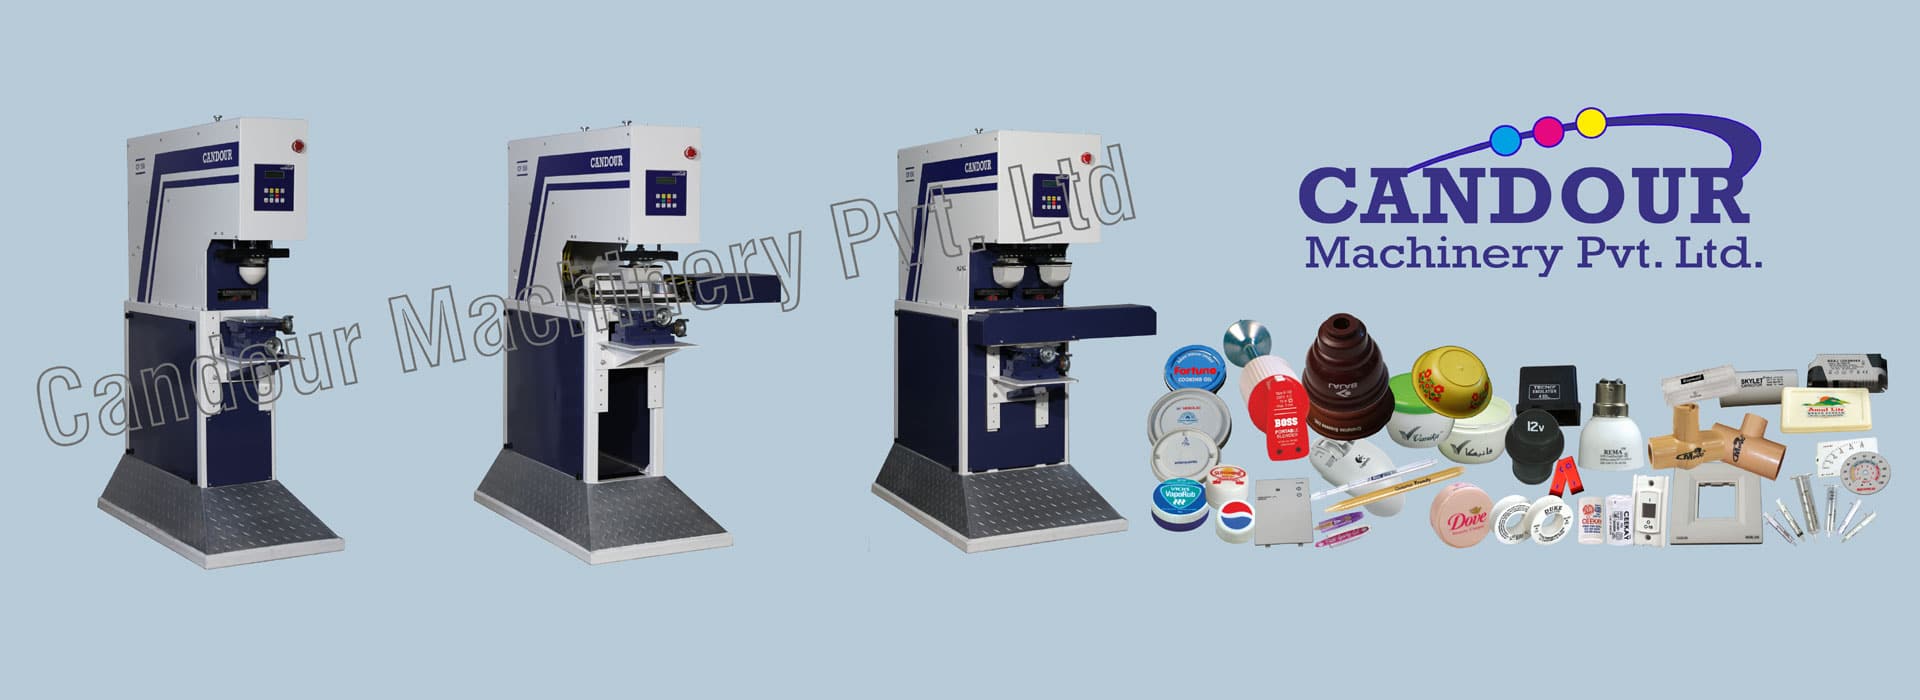 pad printing machine by candour machinery